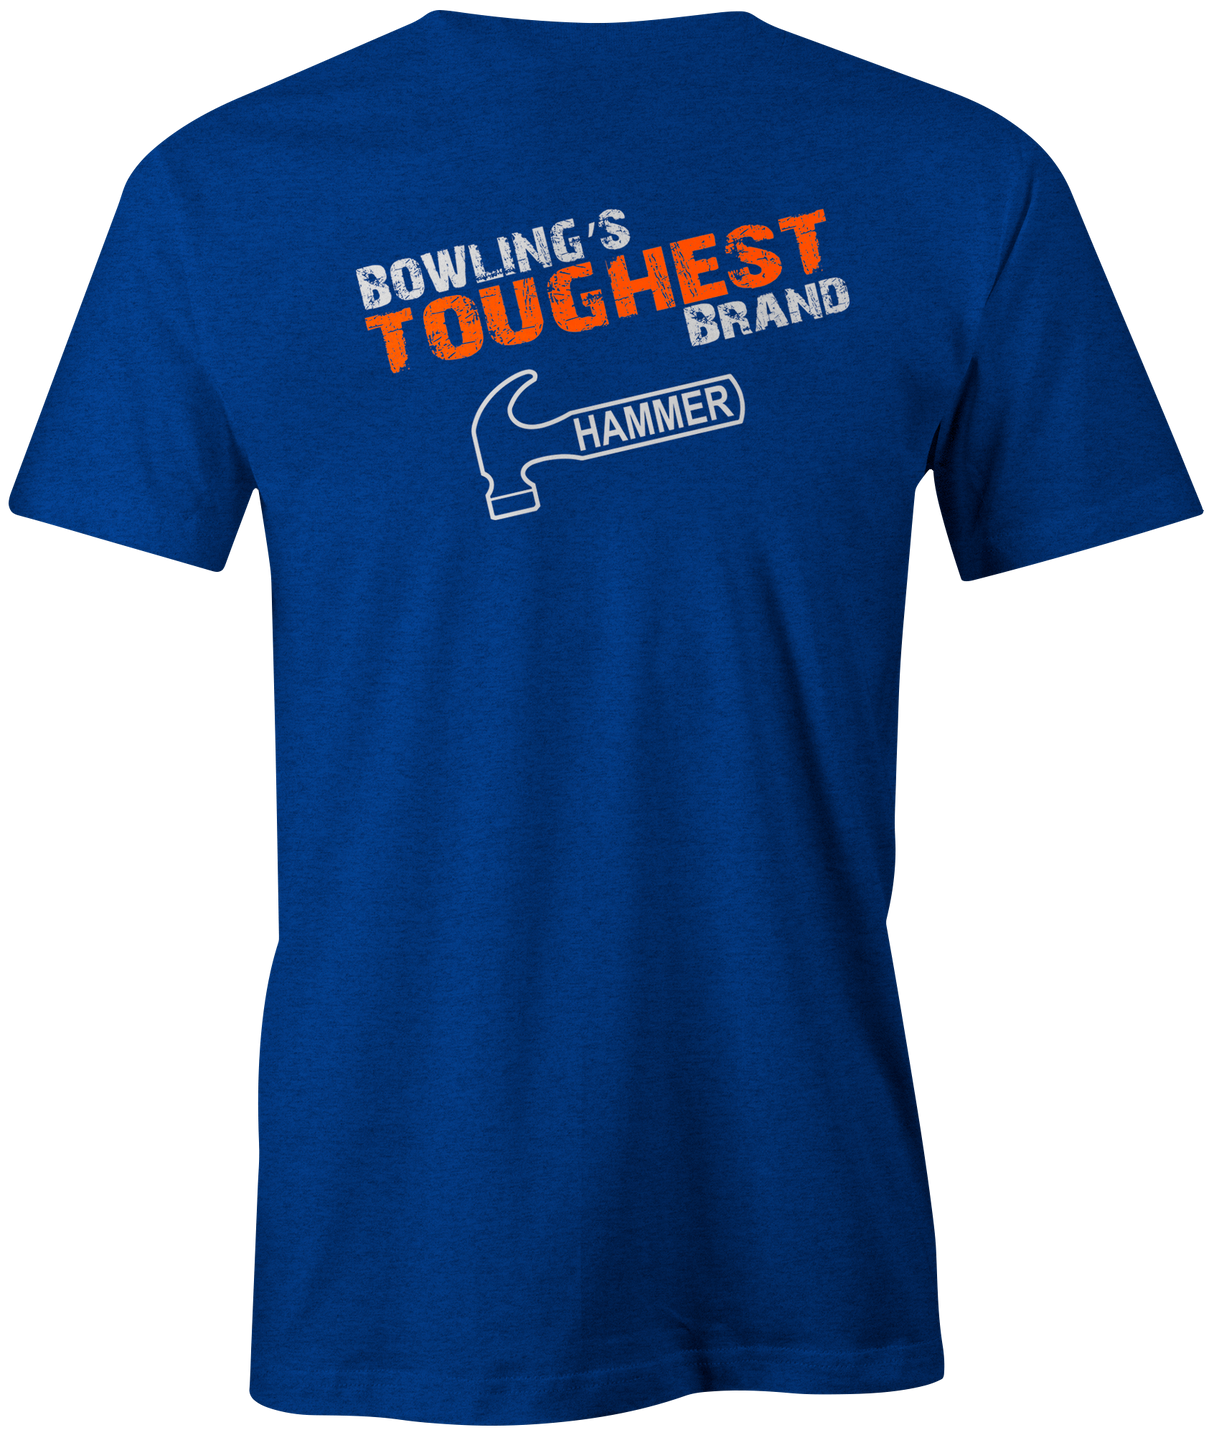 Bowling's Toughest Brand Men's T-Shirt, Blue, Tshirt, tee, tee-shirt, tee shirt, Hammer